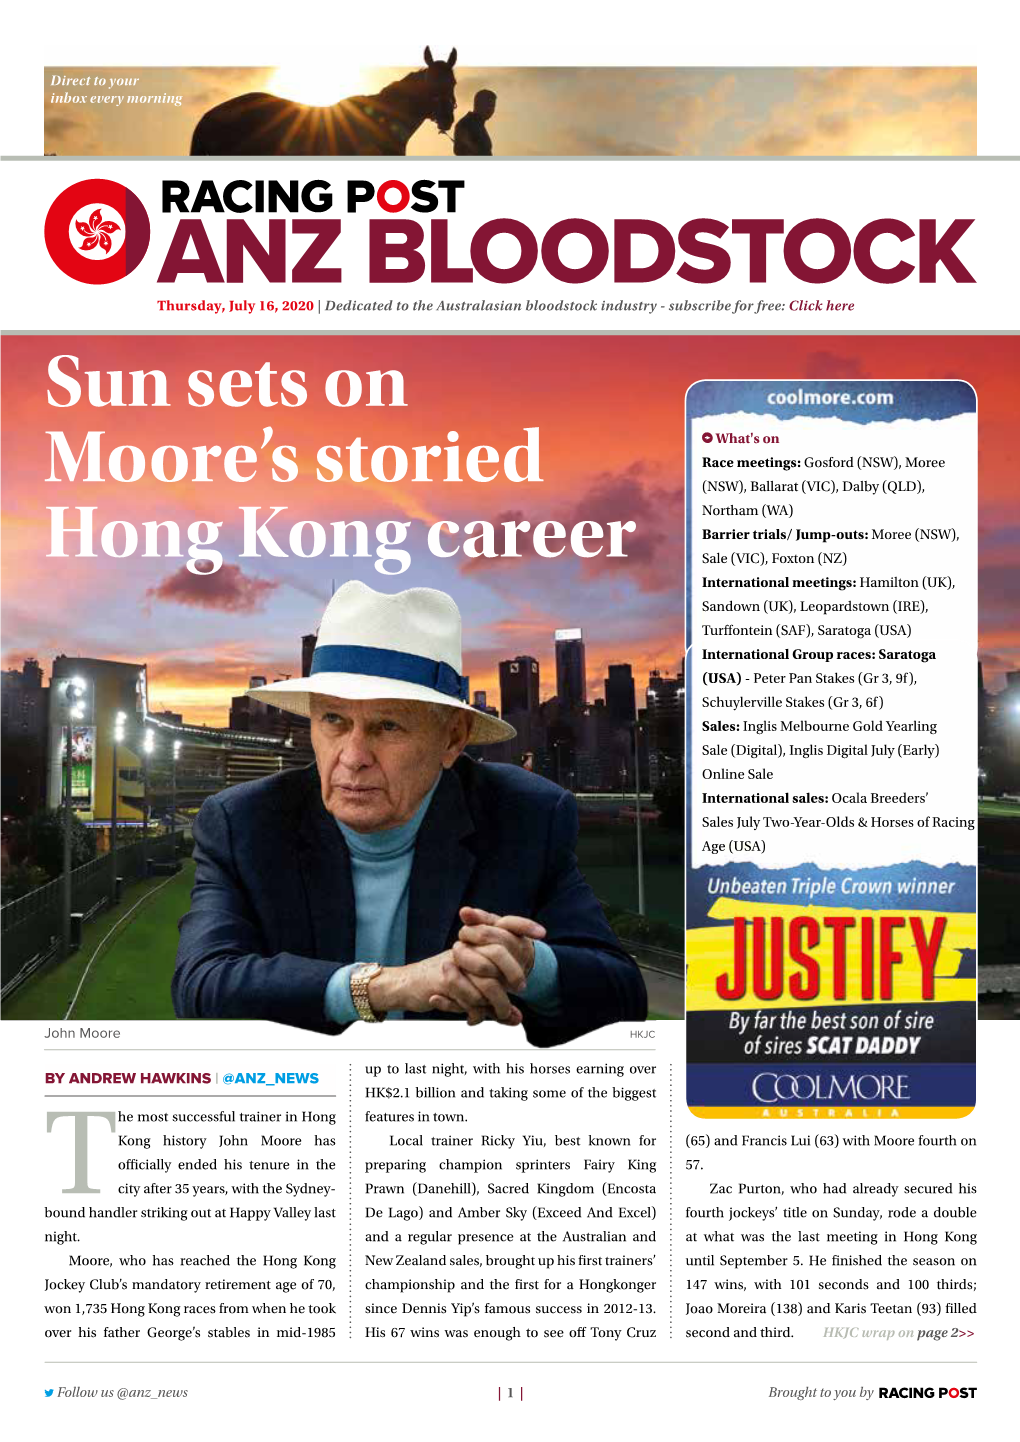 Sun Sets on Moore's Storied Hong Kong Career